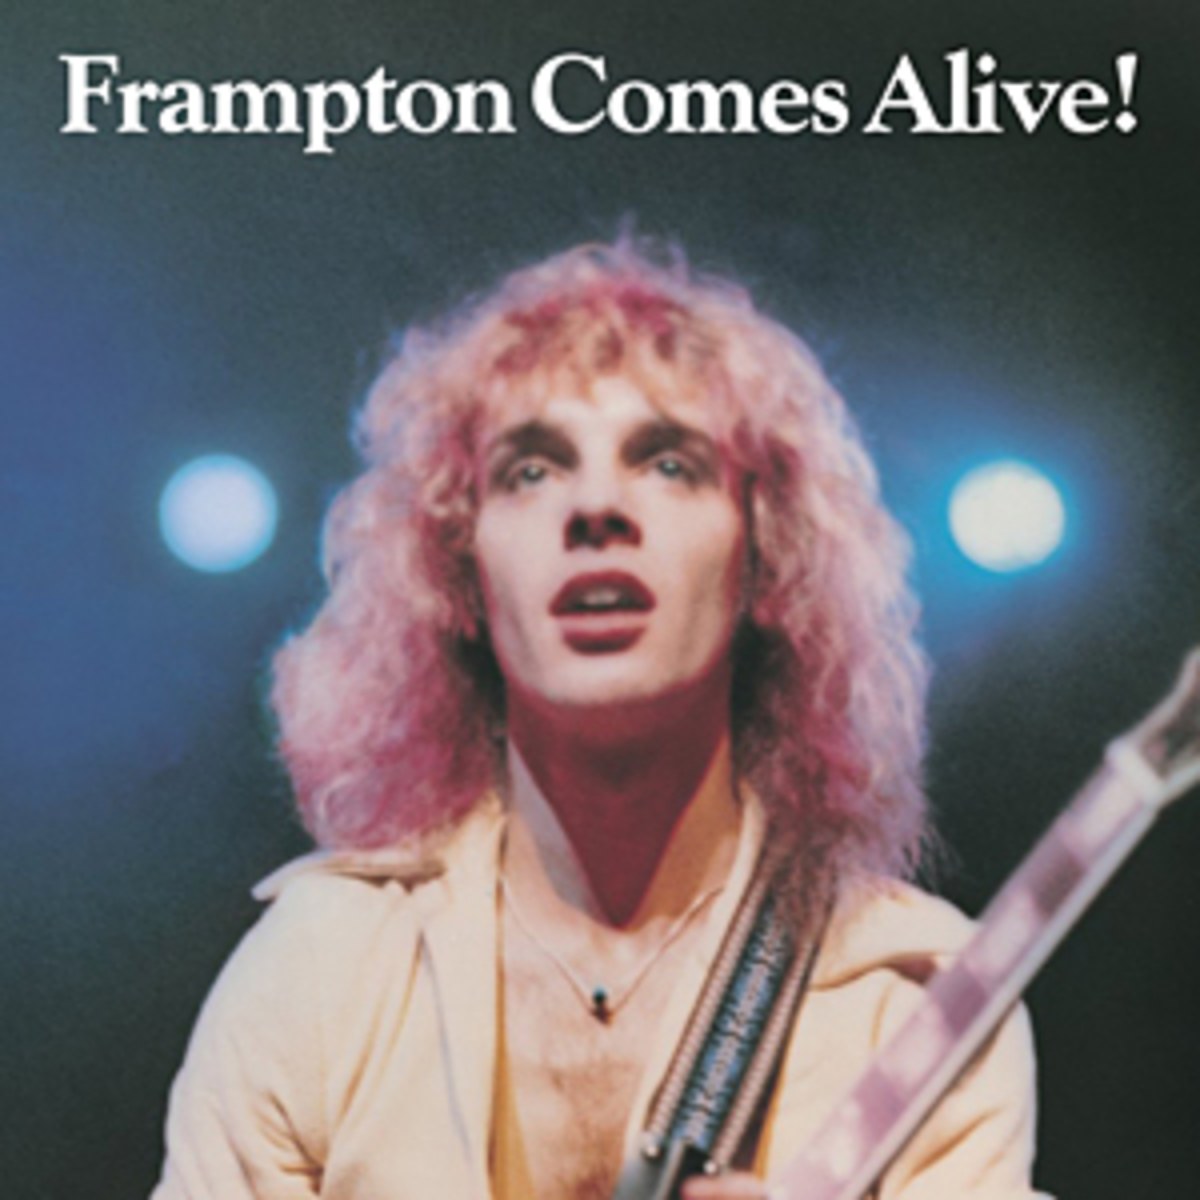 Peter Frampton - Frampton Comes Alive (1976)